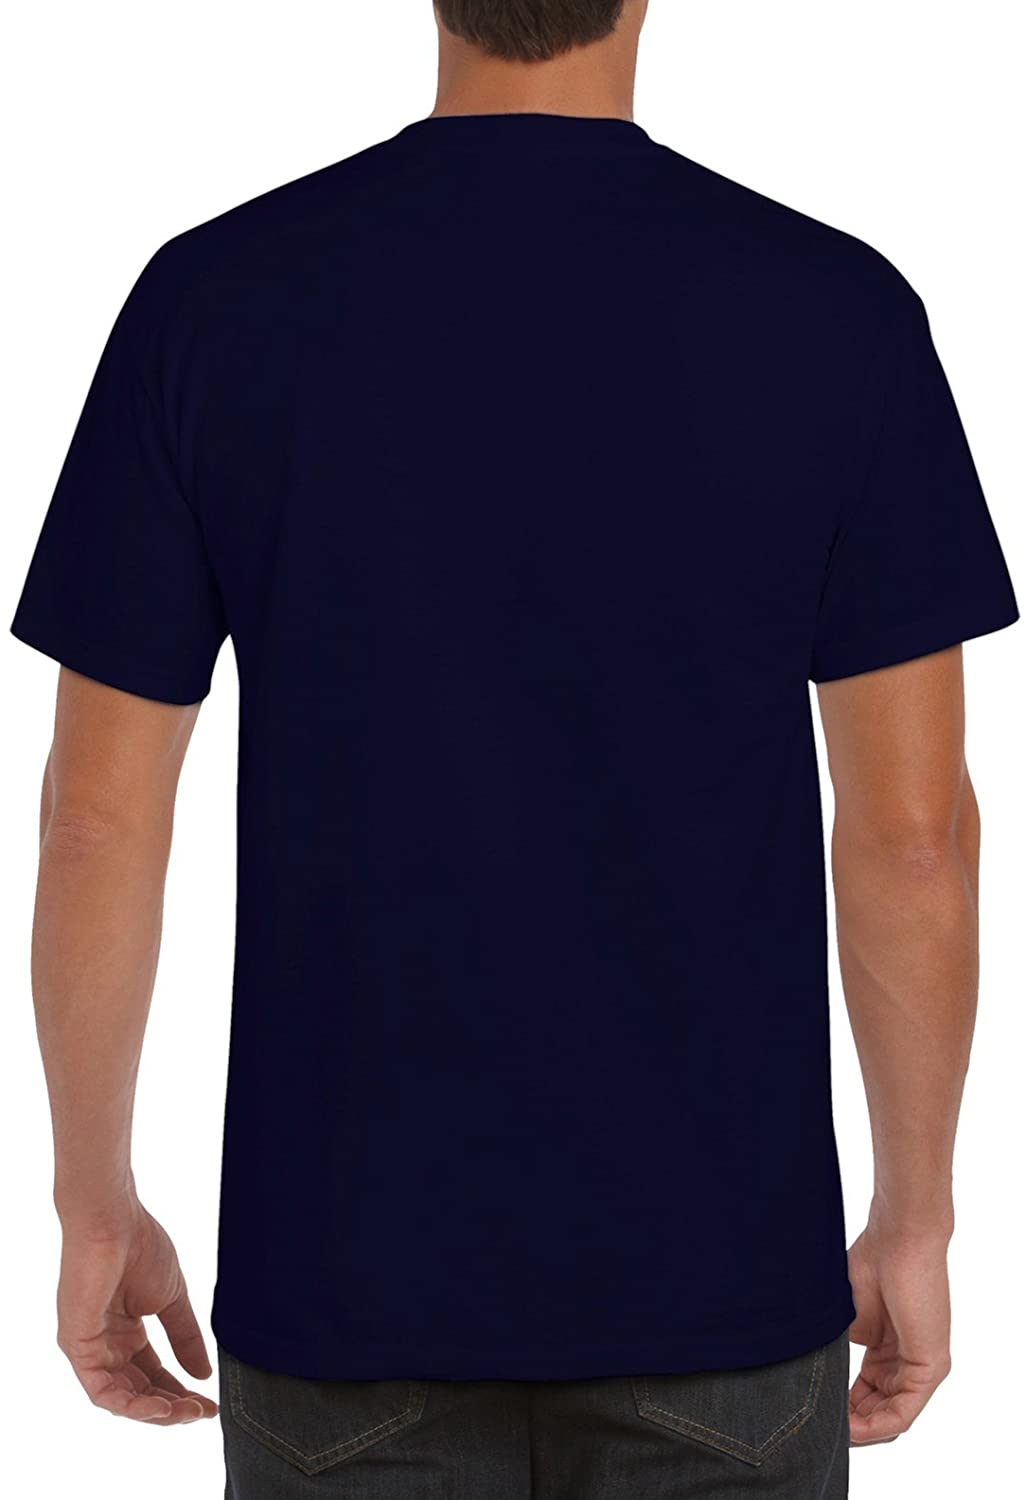 Gildan Mens classic short sleeve t-shirt with pocket - image 2 of 2